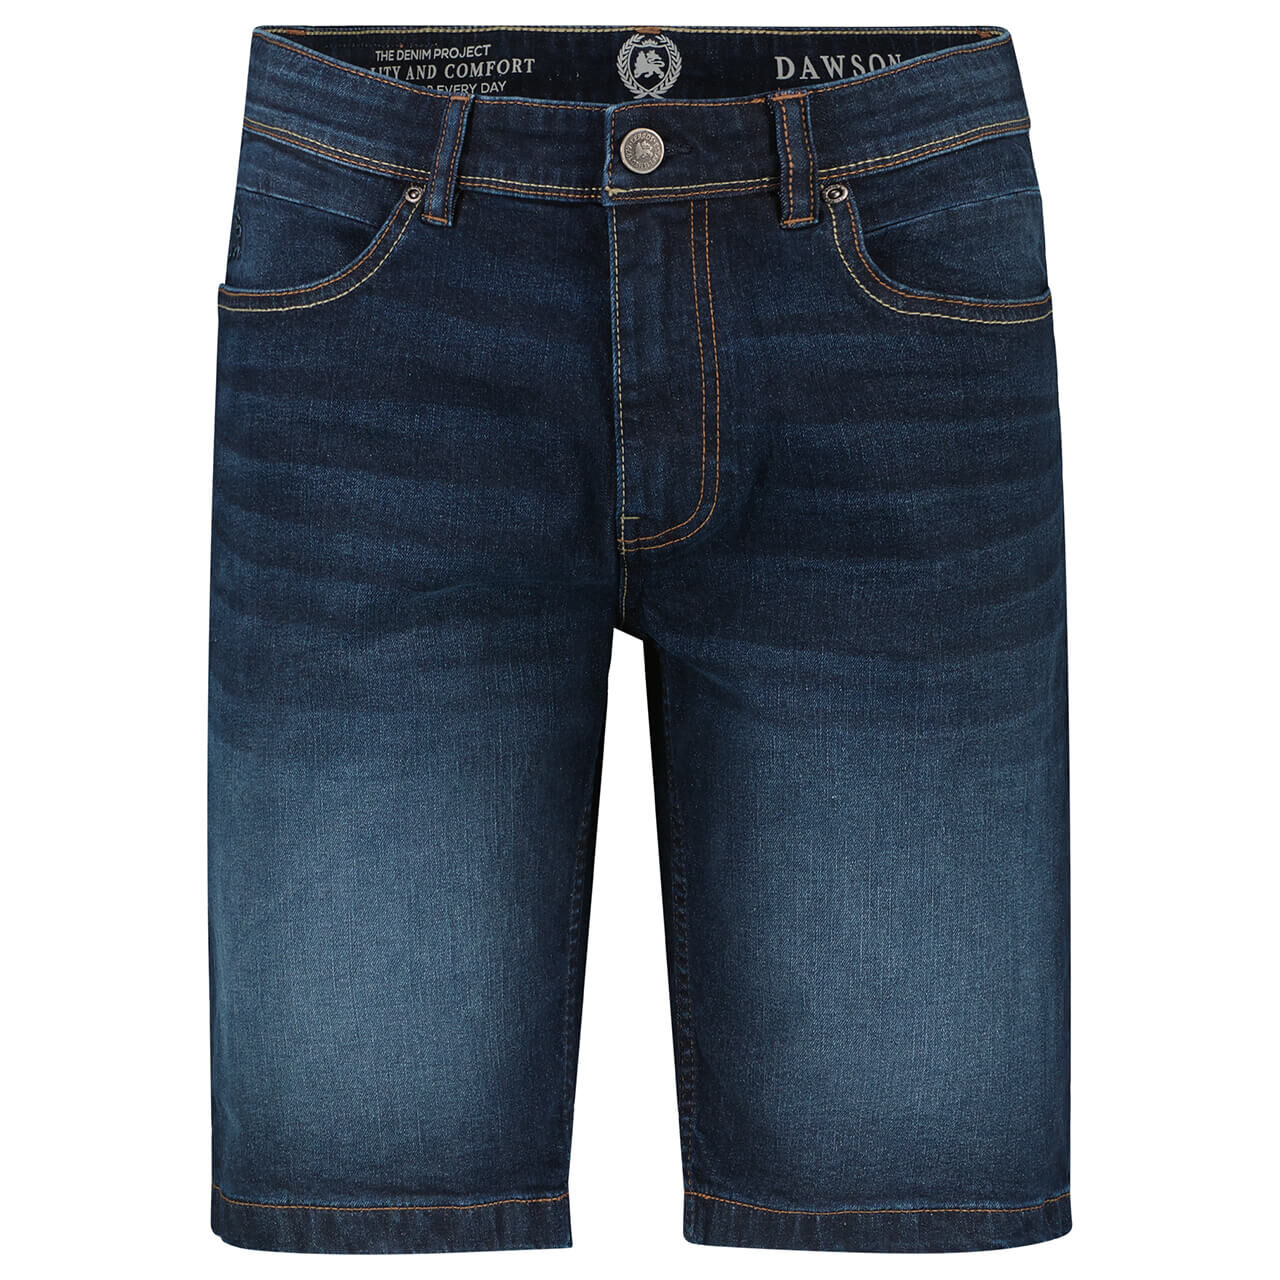 Lerros Dawson Jeans Bermuda dark blue